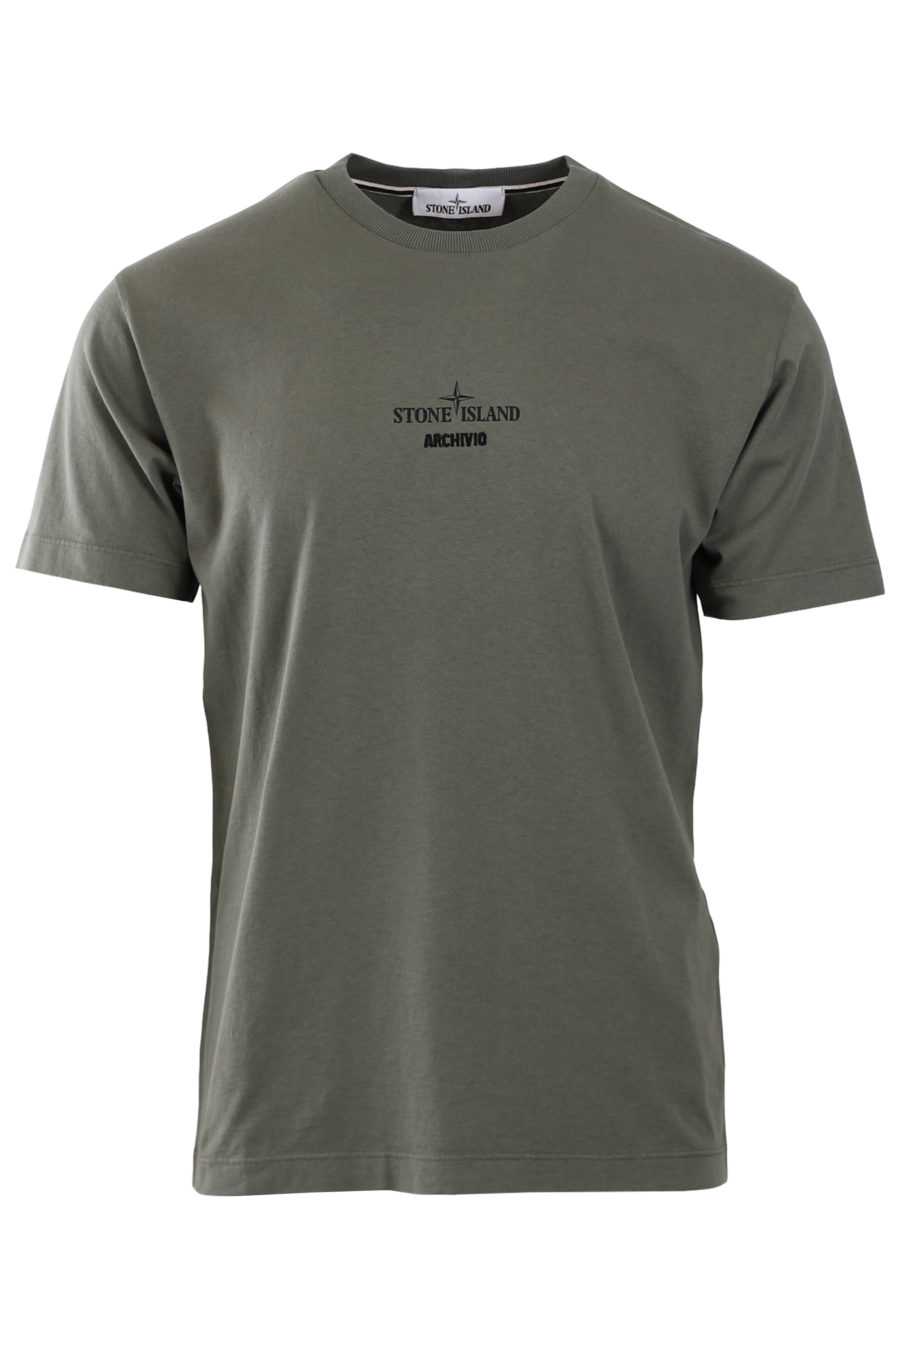 T-shirt militaire "Archivio" - 918156fa9bc978528bd7c238e25a4fa0fdcec7fa